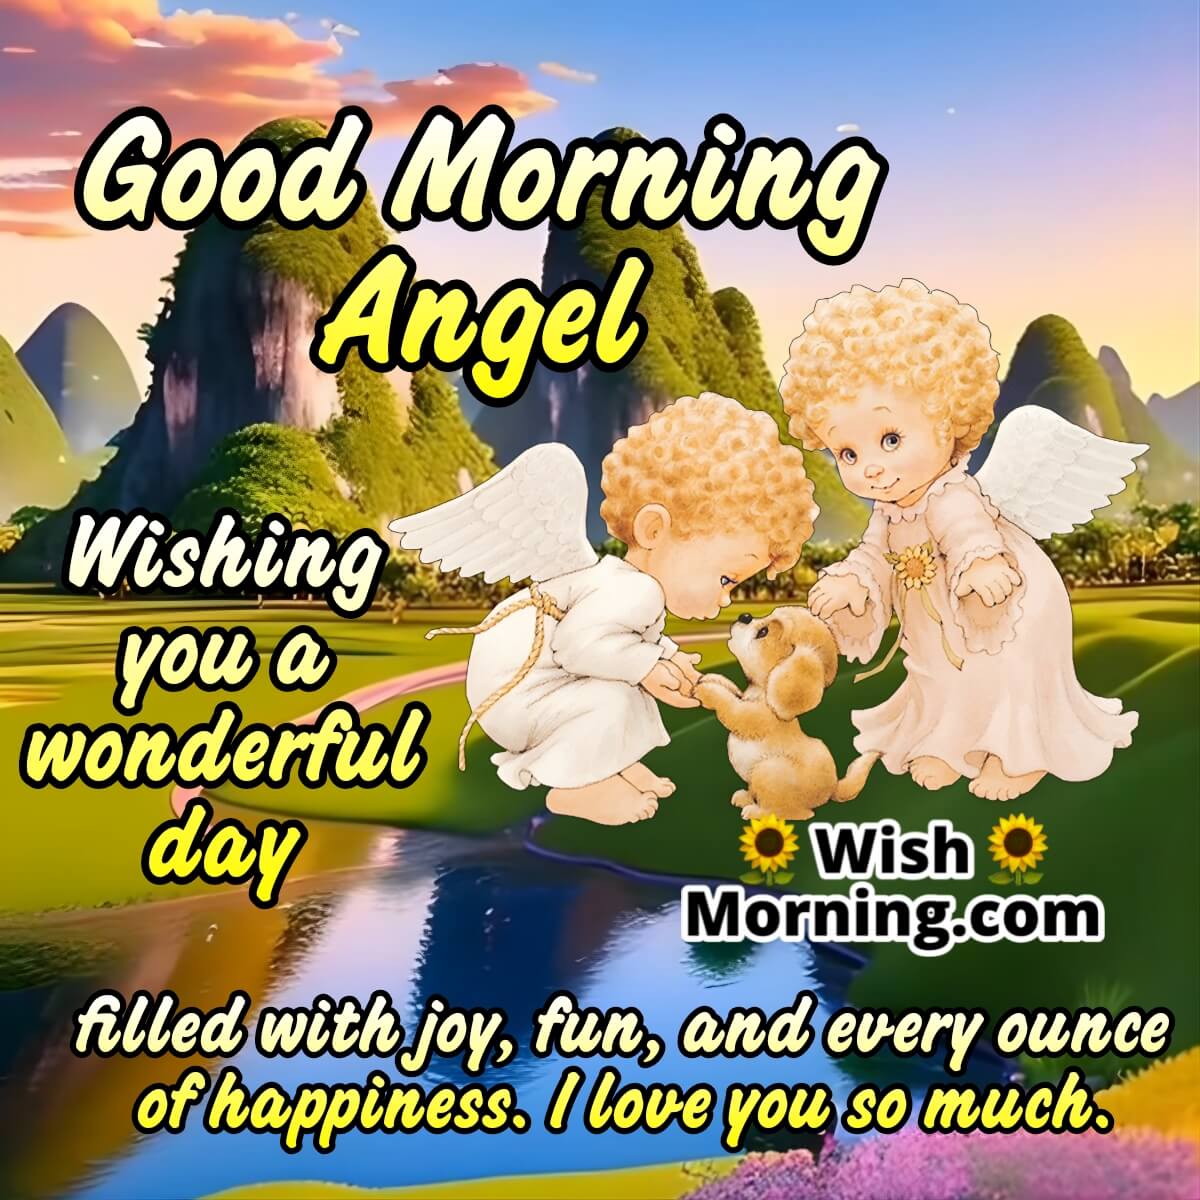 Good Morning Angel Wishing Wonderful Day